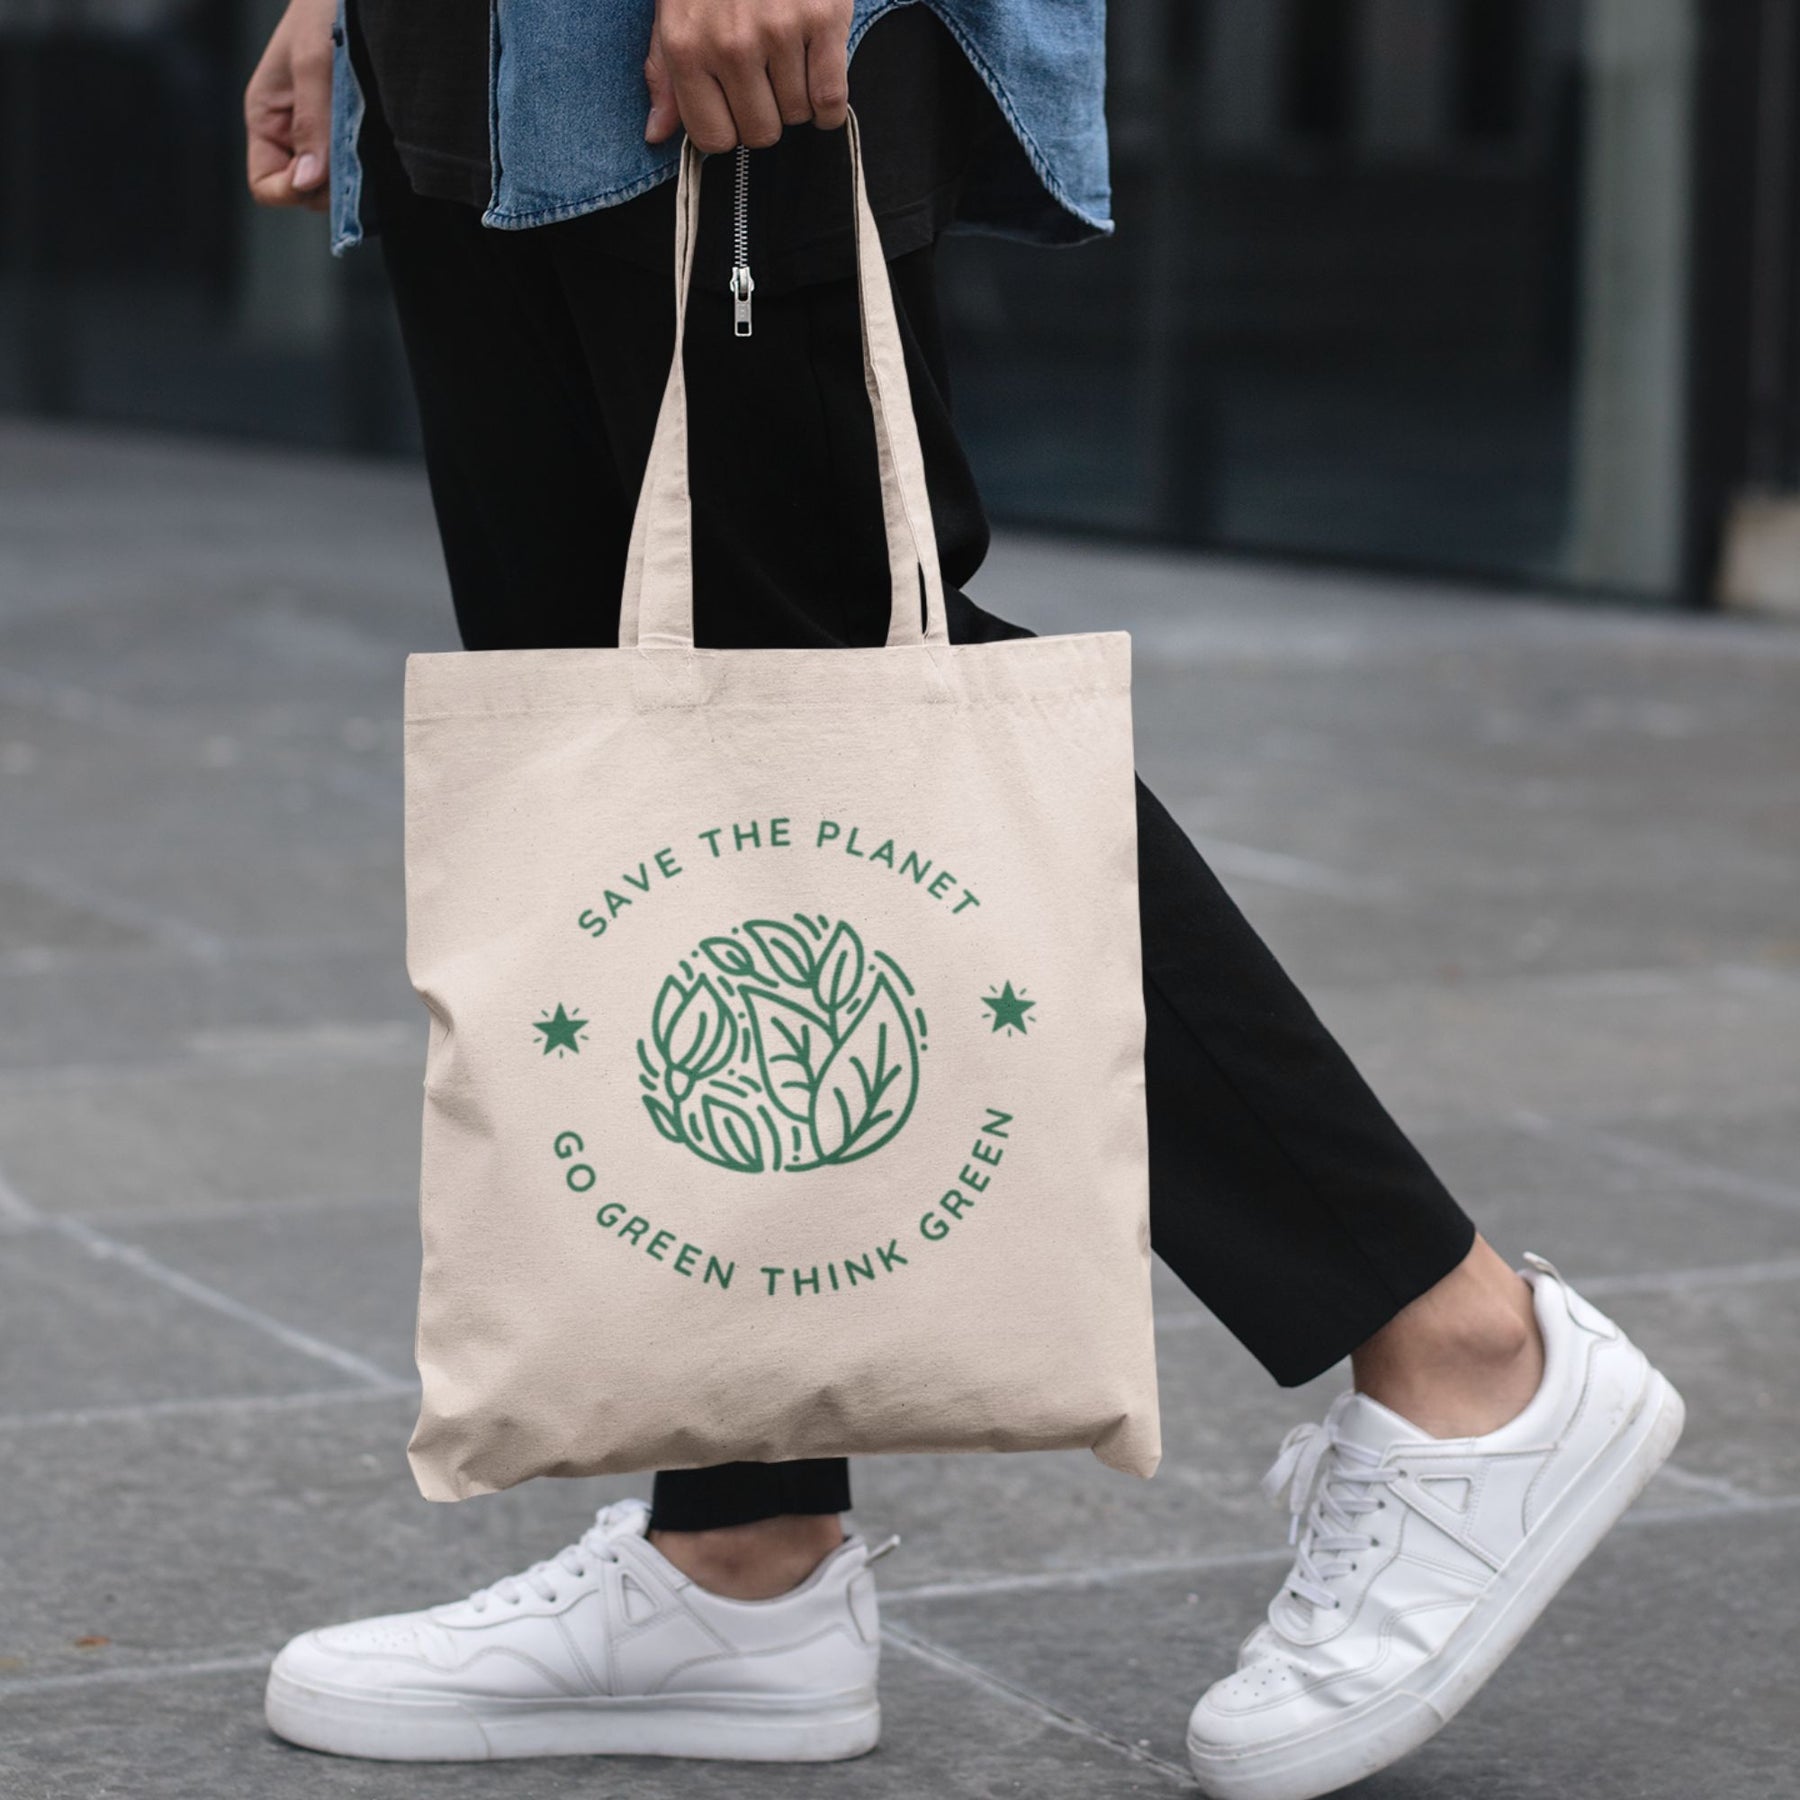 Save the planet printed tote bag